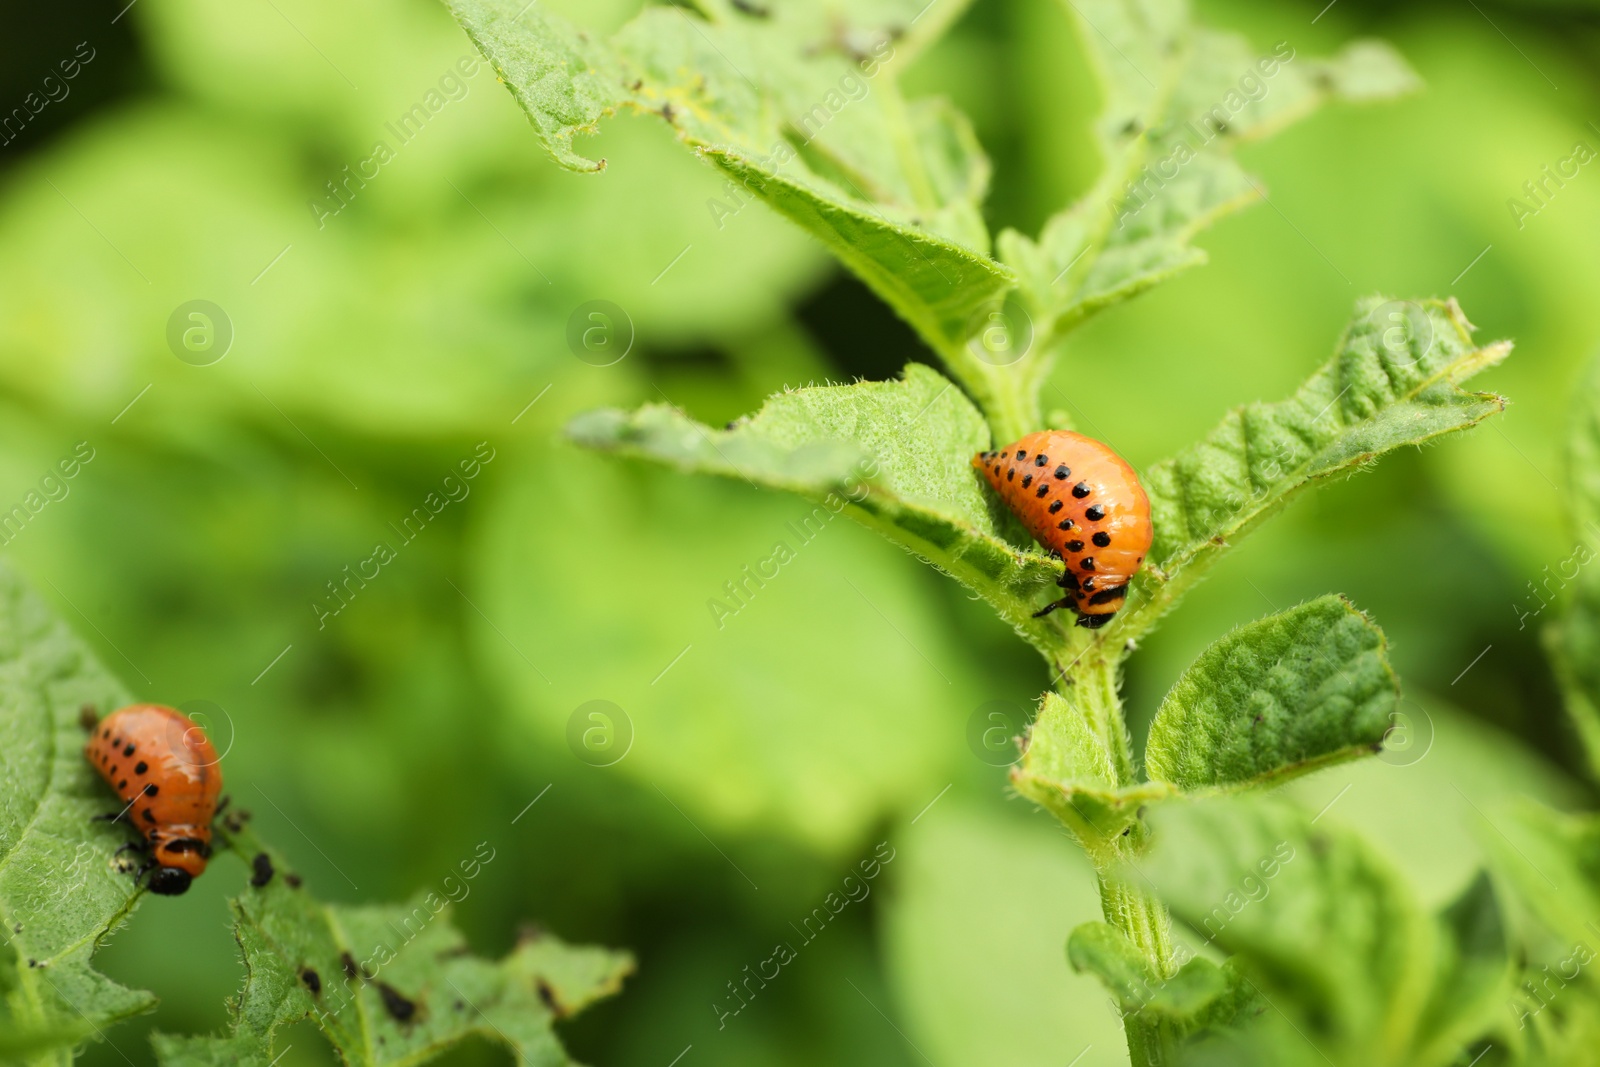 Photo of Colorado potato beetle larvae on plant outdoors, closeup